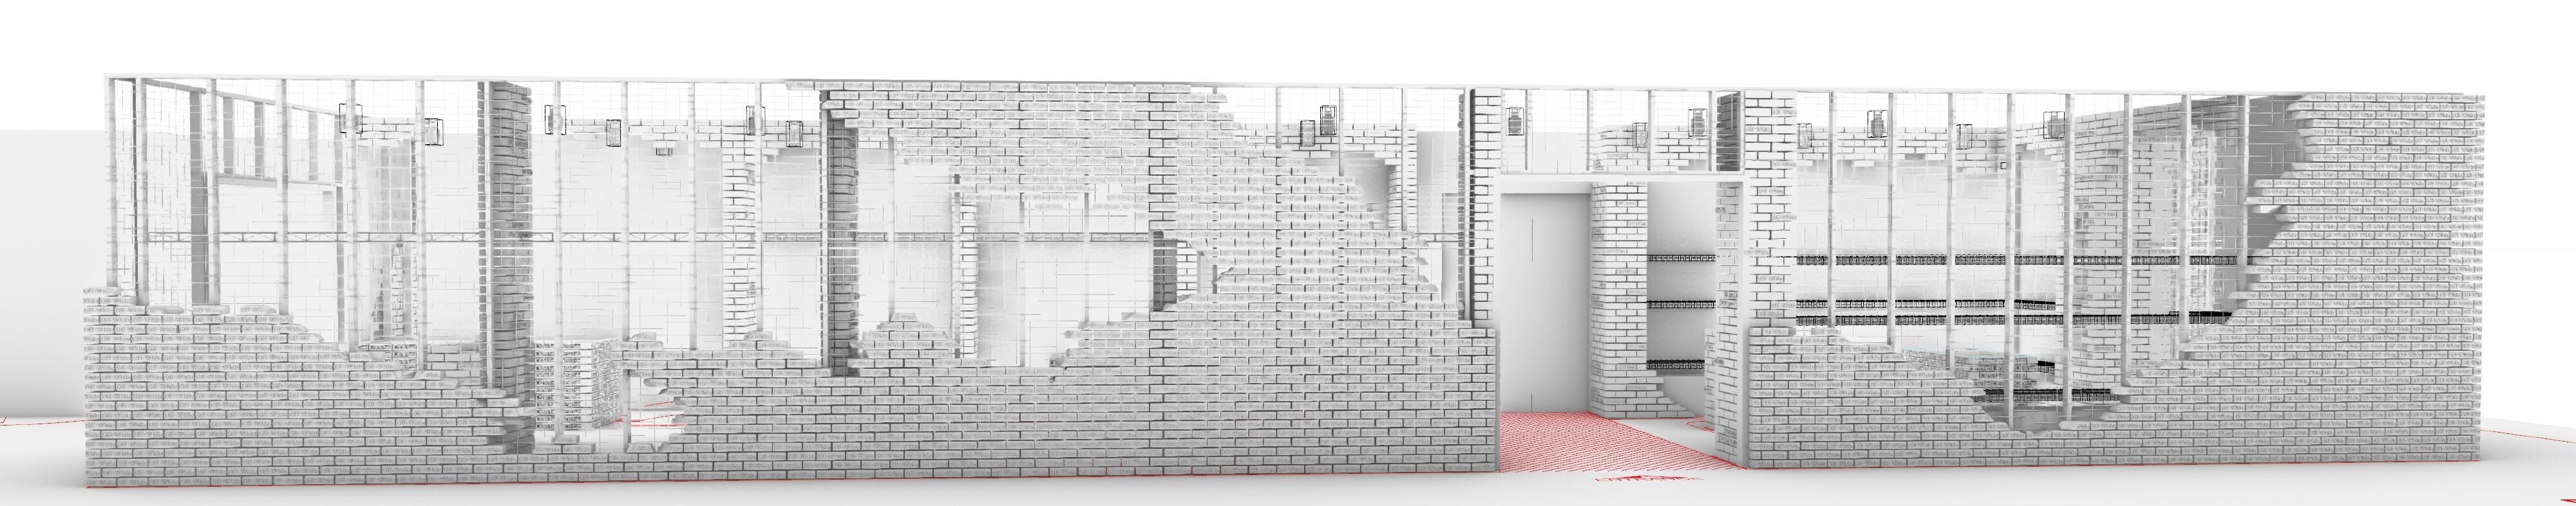 Elevation Render of South facade | I-Beam Design